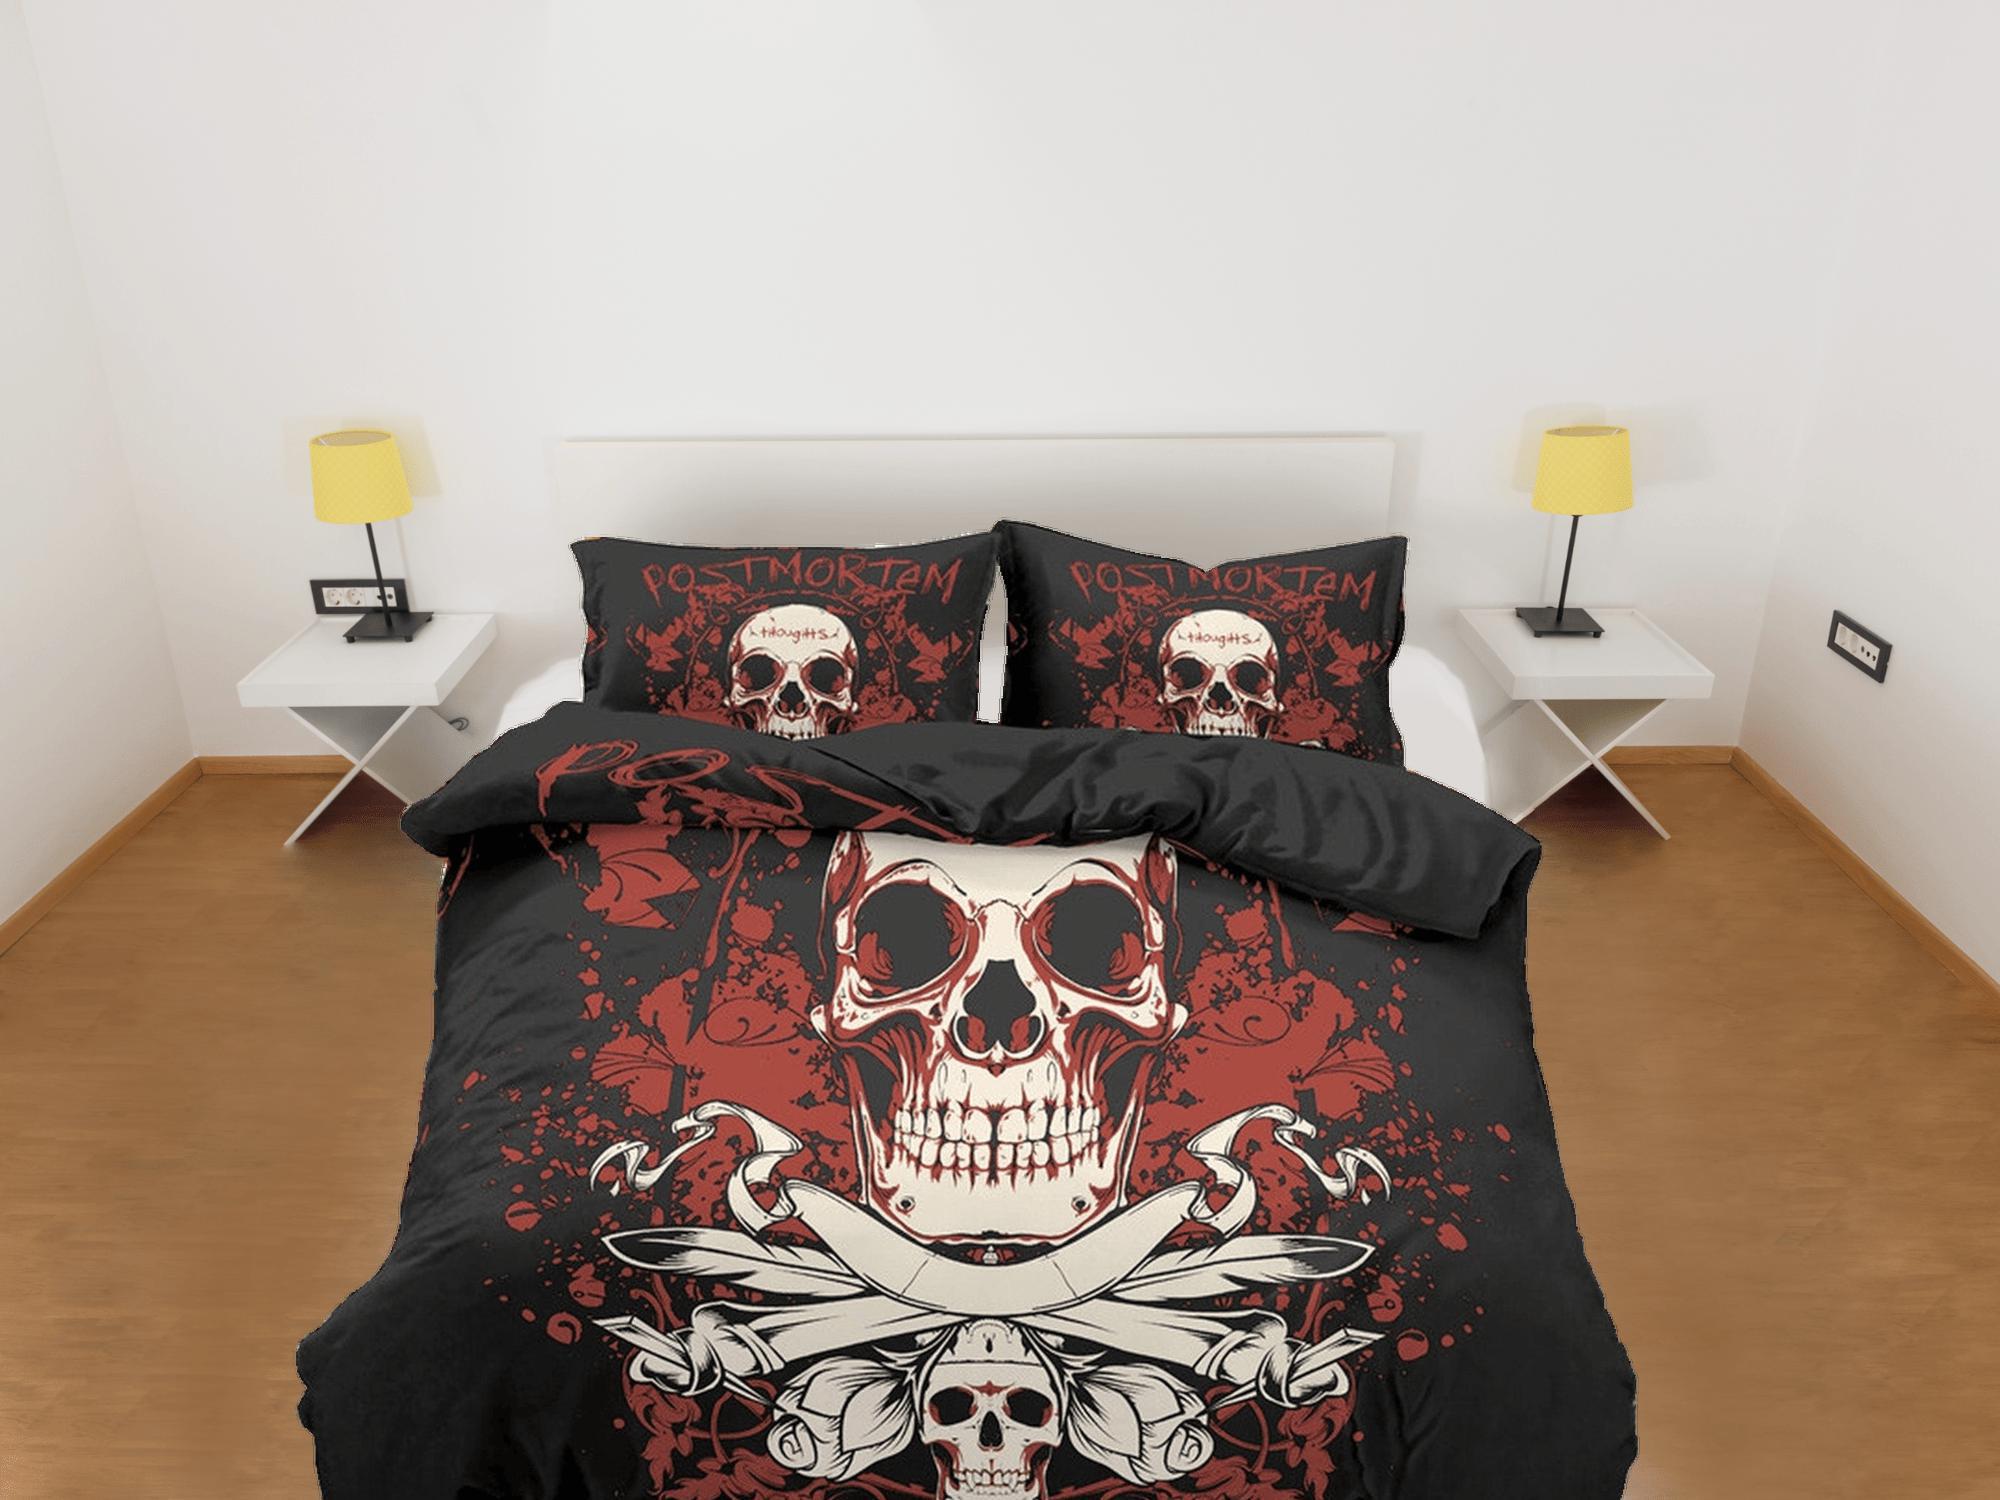 daintyduvet Skull in Flames Black Duvet Cover Set Bedspread, Dorm Bedding with Pillowcase